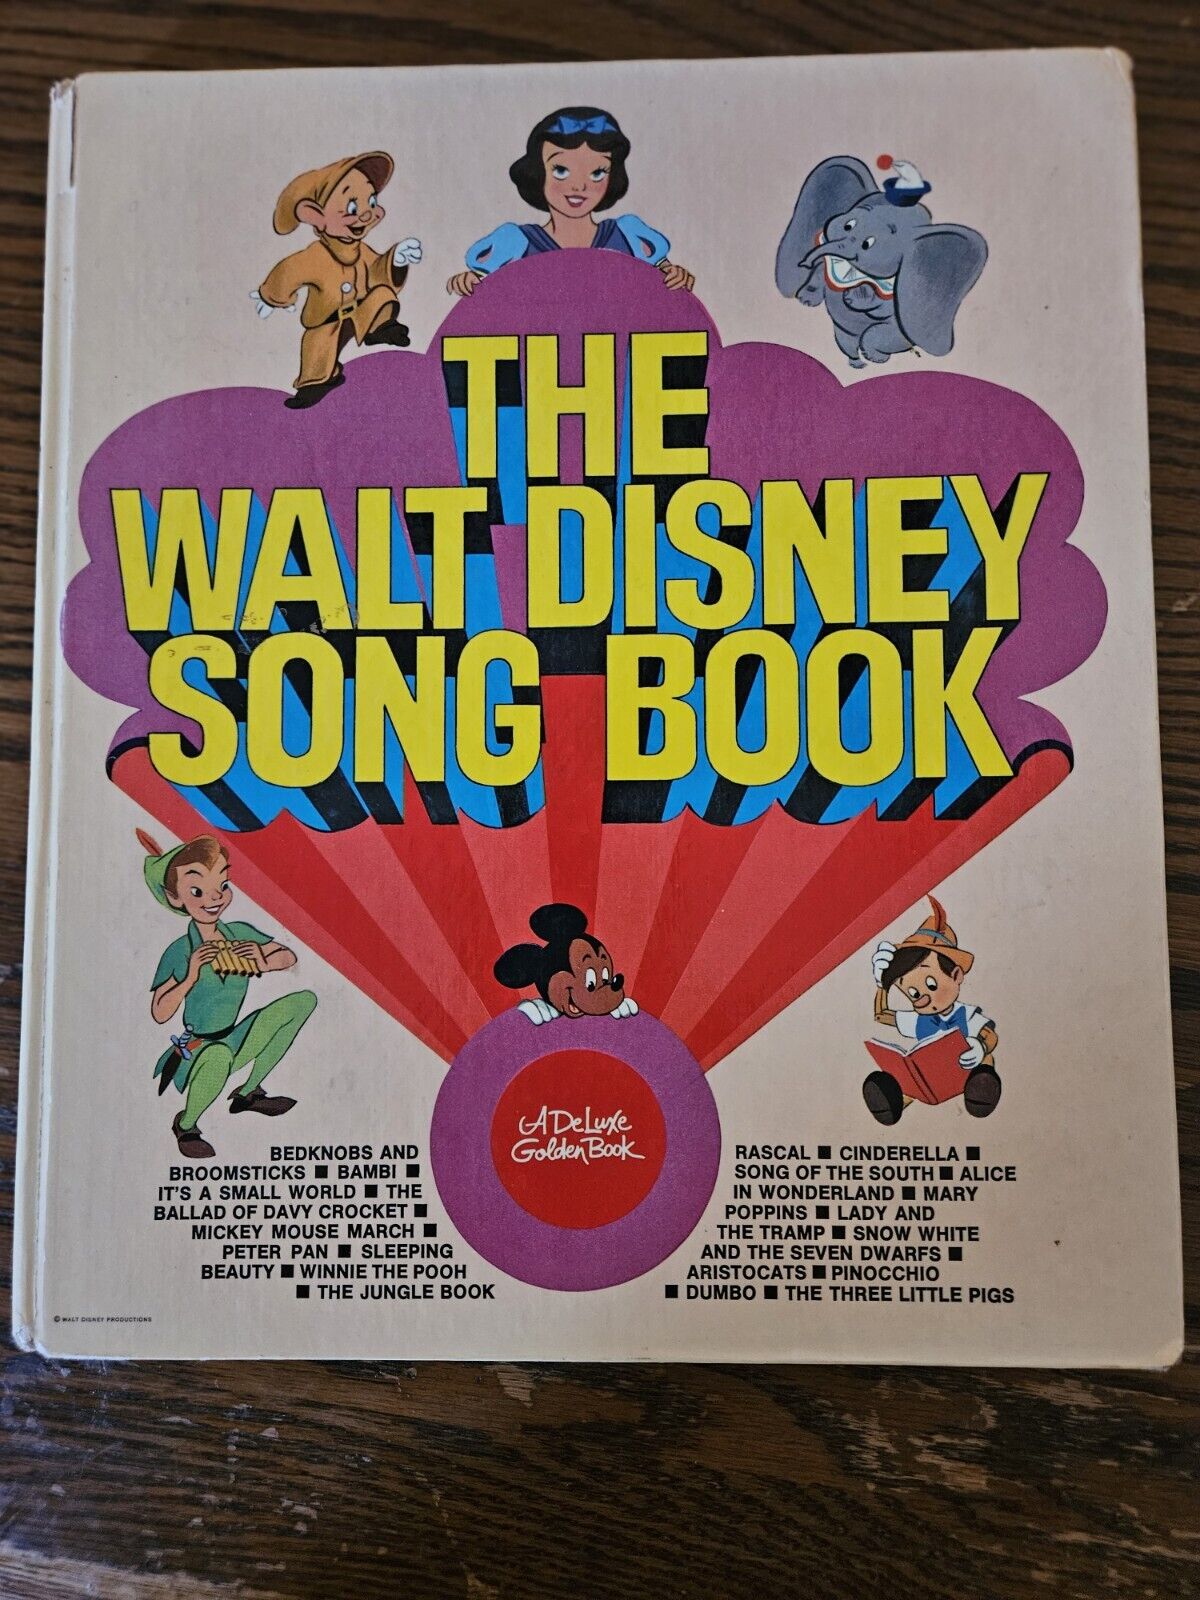 Vintage 1970's The Walt Disney Song Book - Golden Book - Sheet Music - 34 Songs